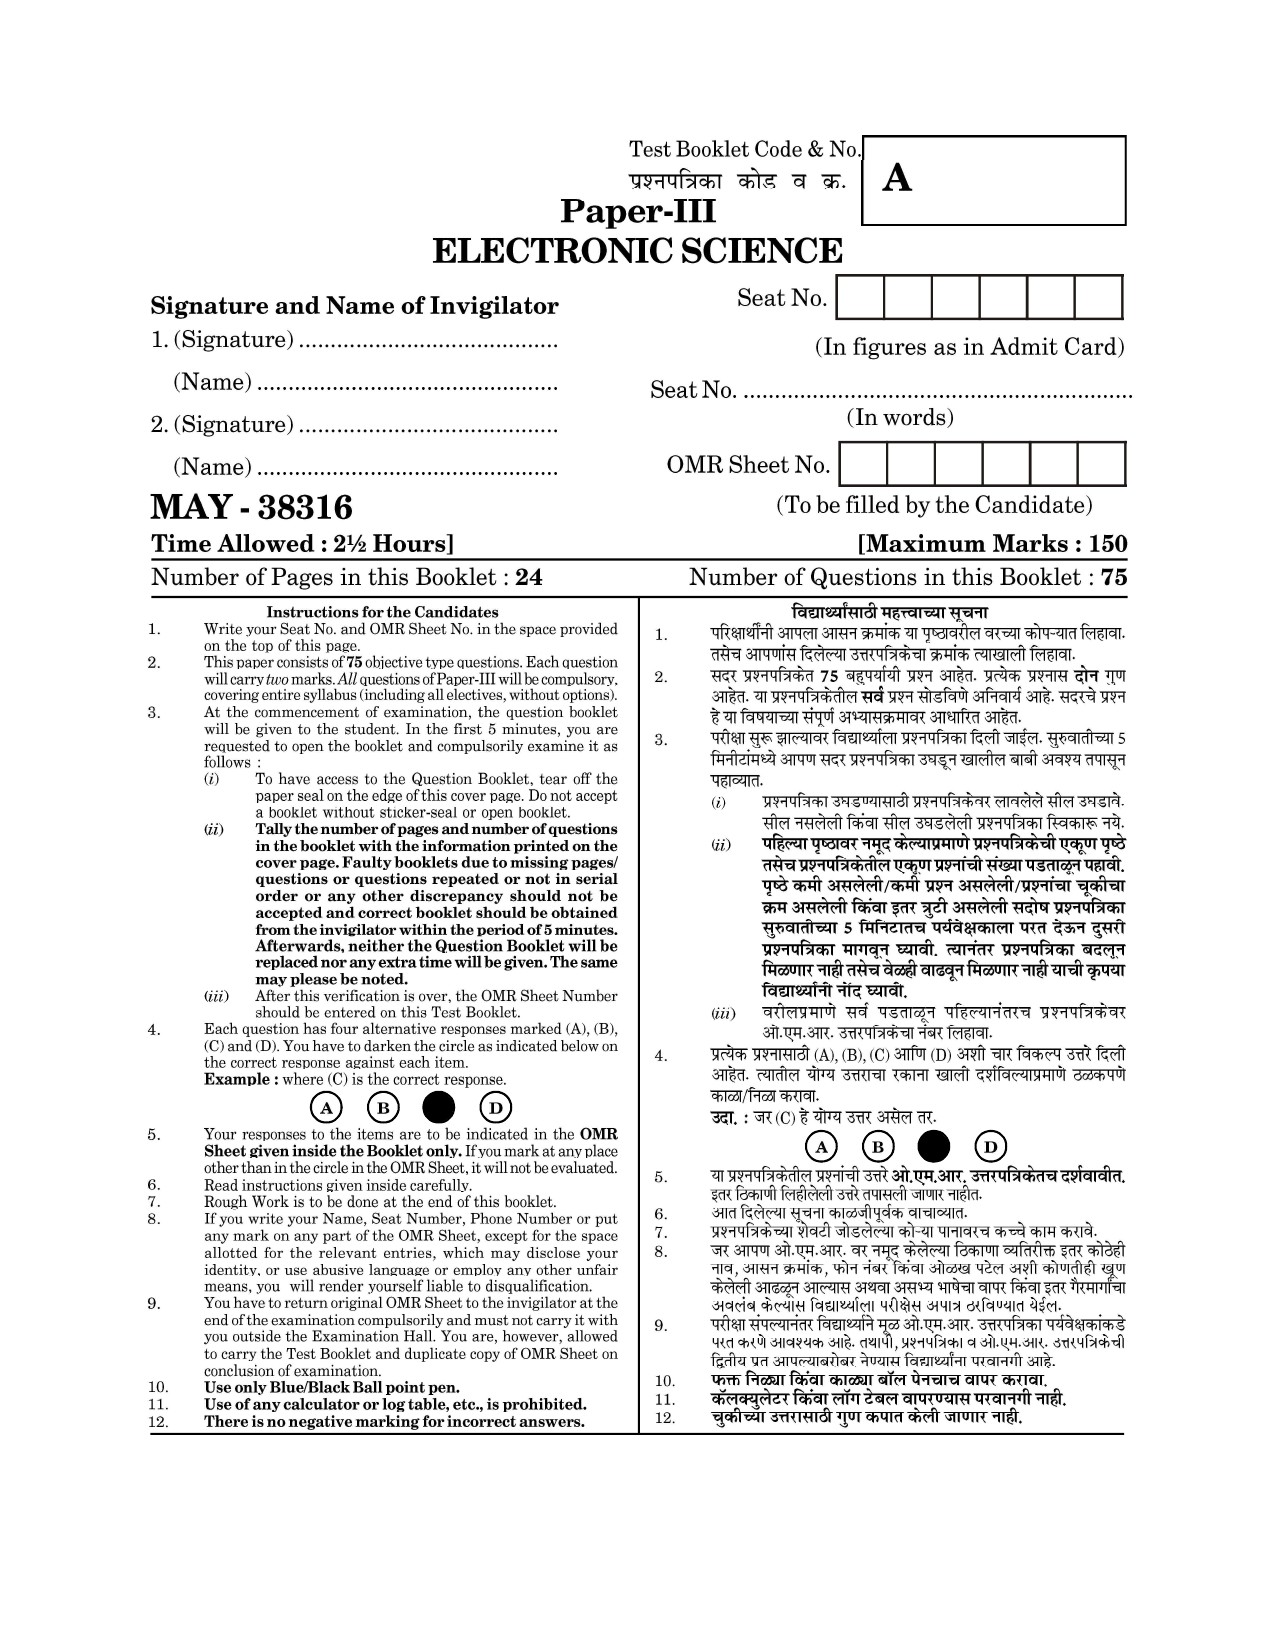 Maharashtra SET Electronics Science Question Paper III May 2016 1